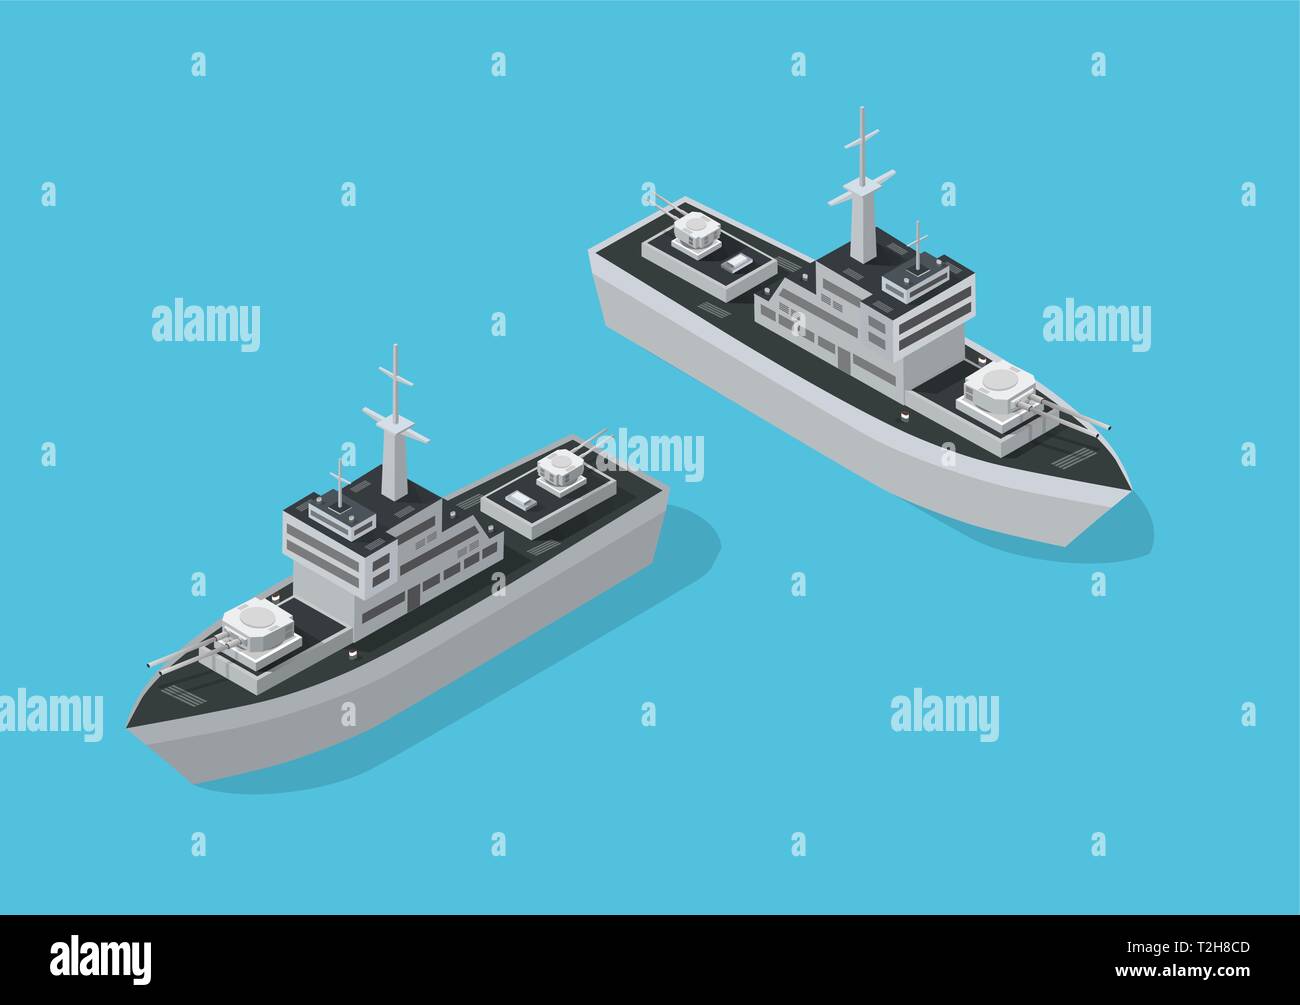 Warship military boat naval Battleship Navy with guns. Isometric ship army vector illustration stock image. Stock Vector